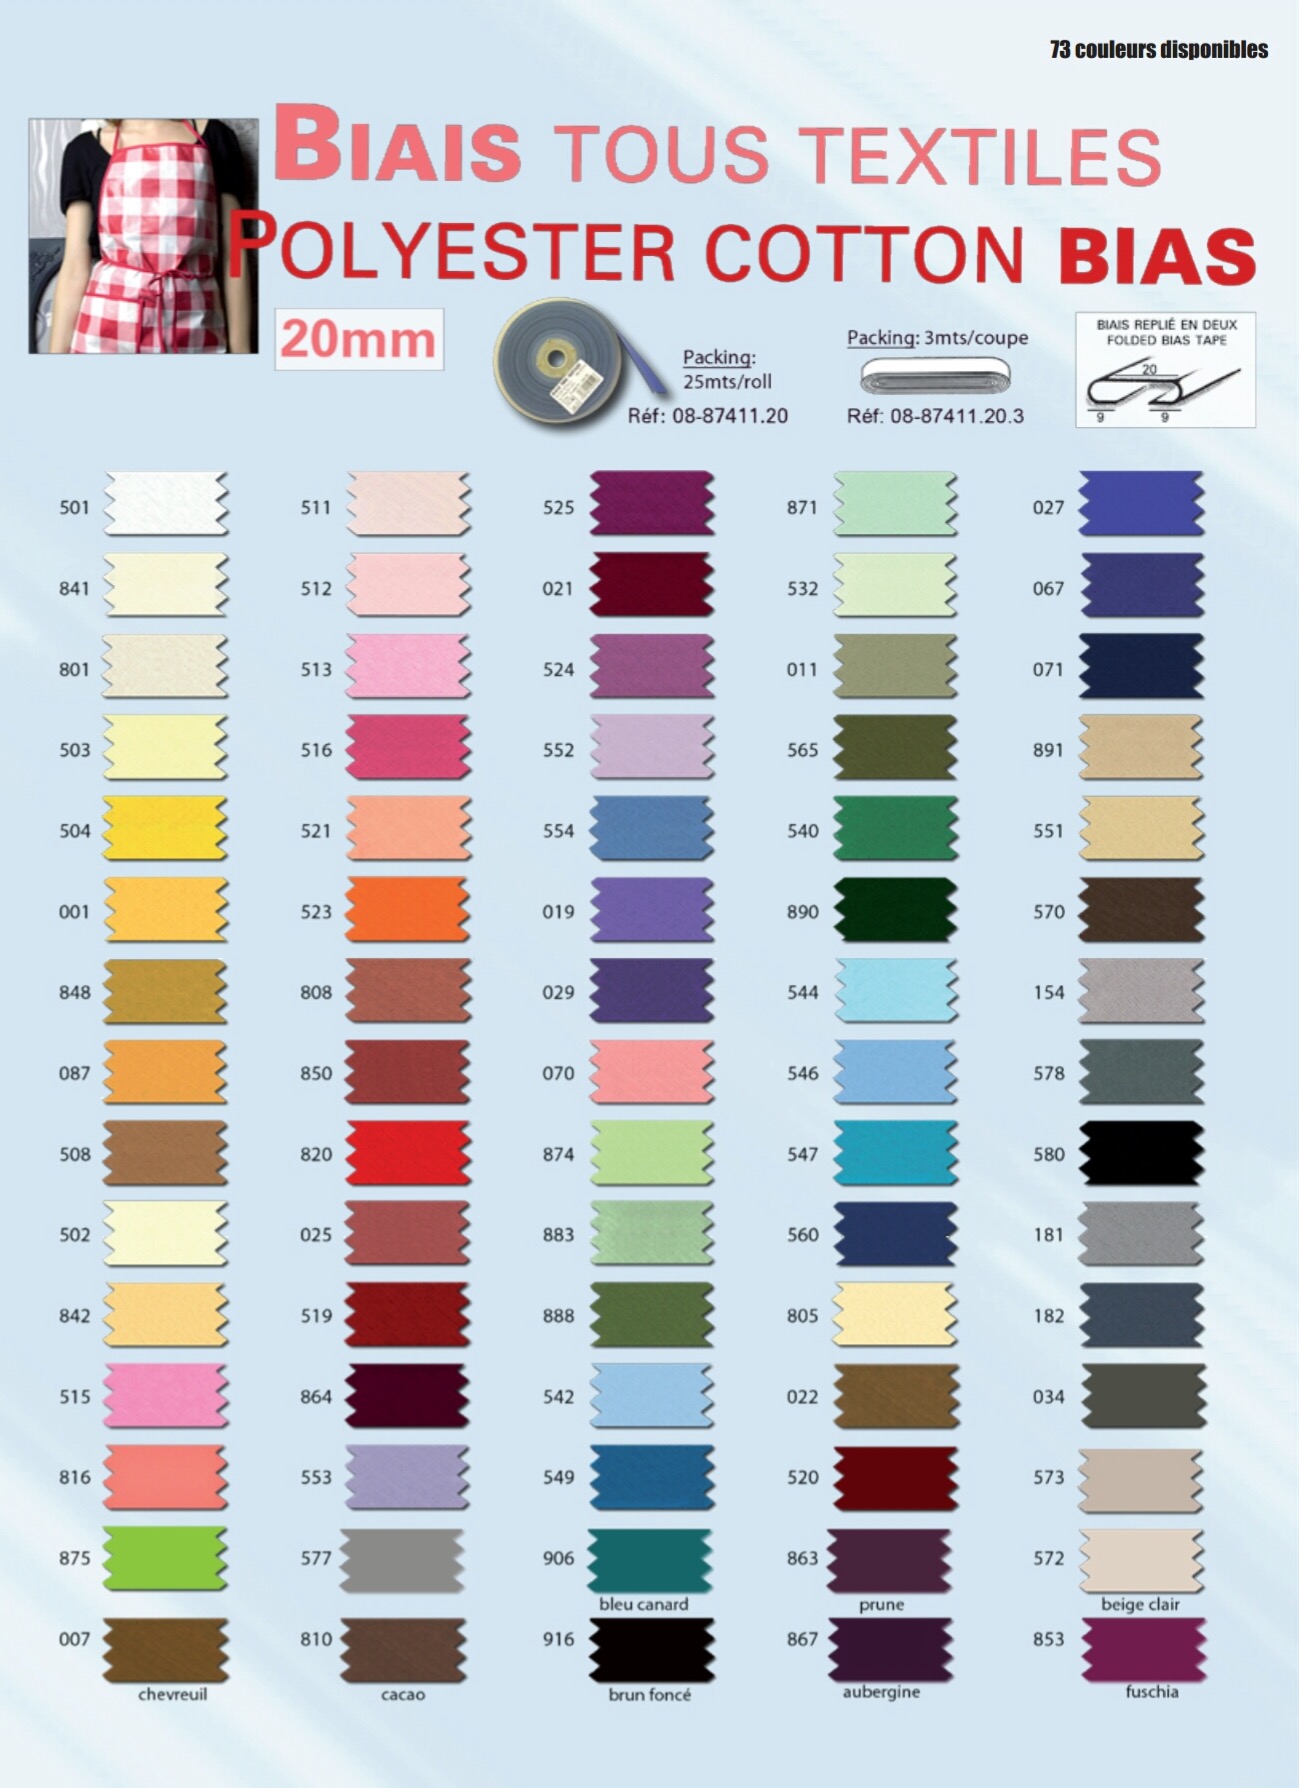 biais tous textiles 20mm polyester coton